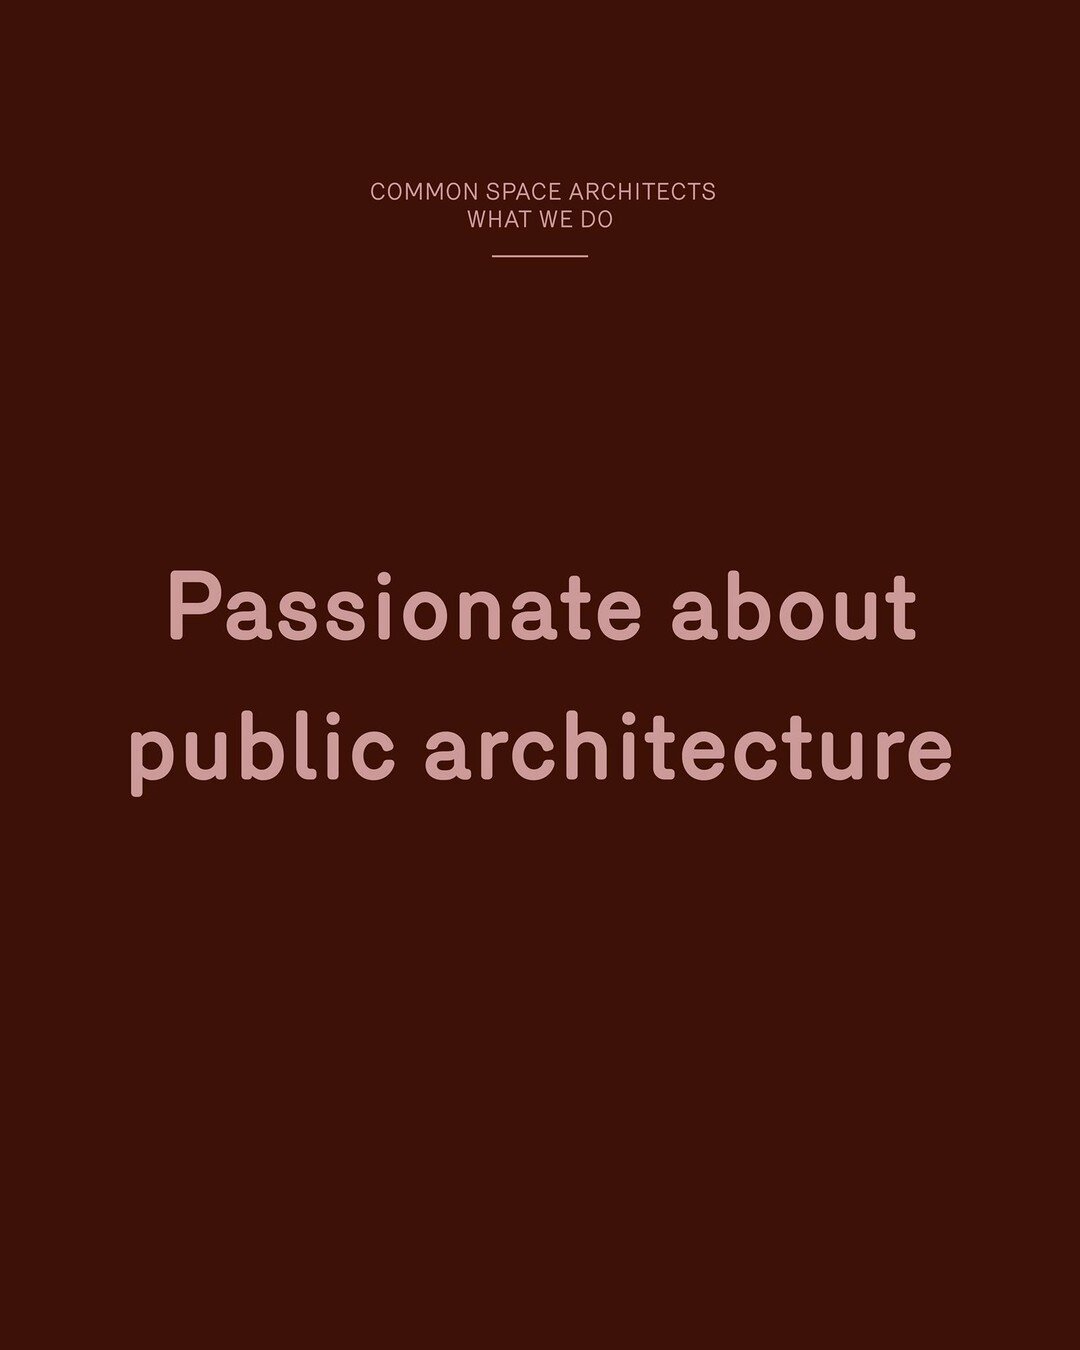 Passionate about Public Architecture 
____________________

#commonspacearchitects #architecturenz #nzarchitecture #archilovers #publicarchitecture #nzia #architecture #design